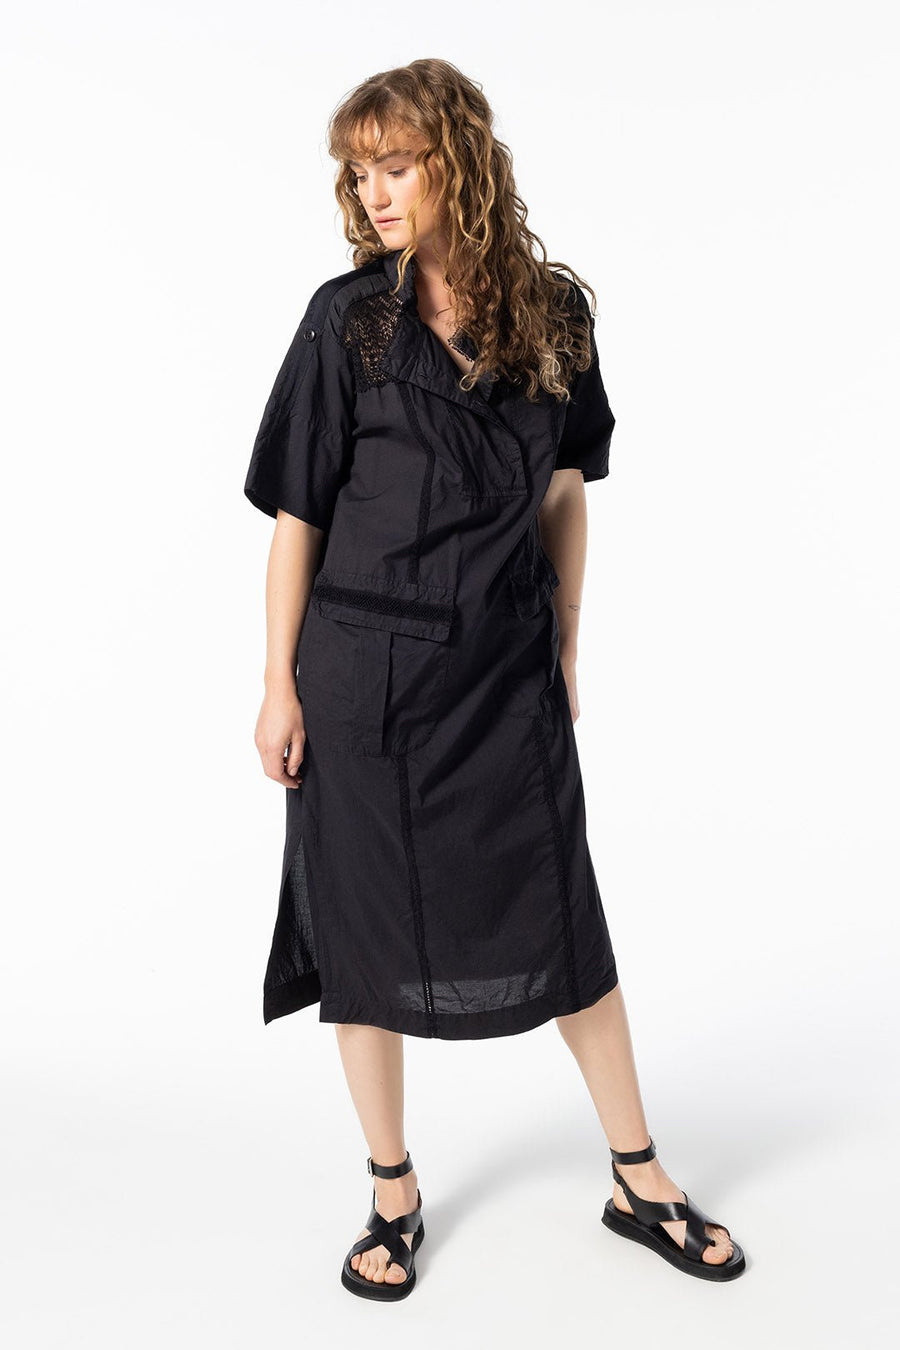 ALEXANDRIA UTILITARIAN DRESS, BLACK - Burning Torch Online Boutique